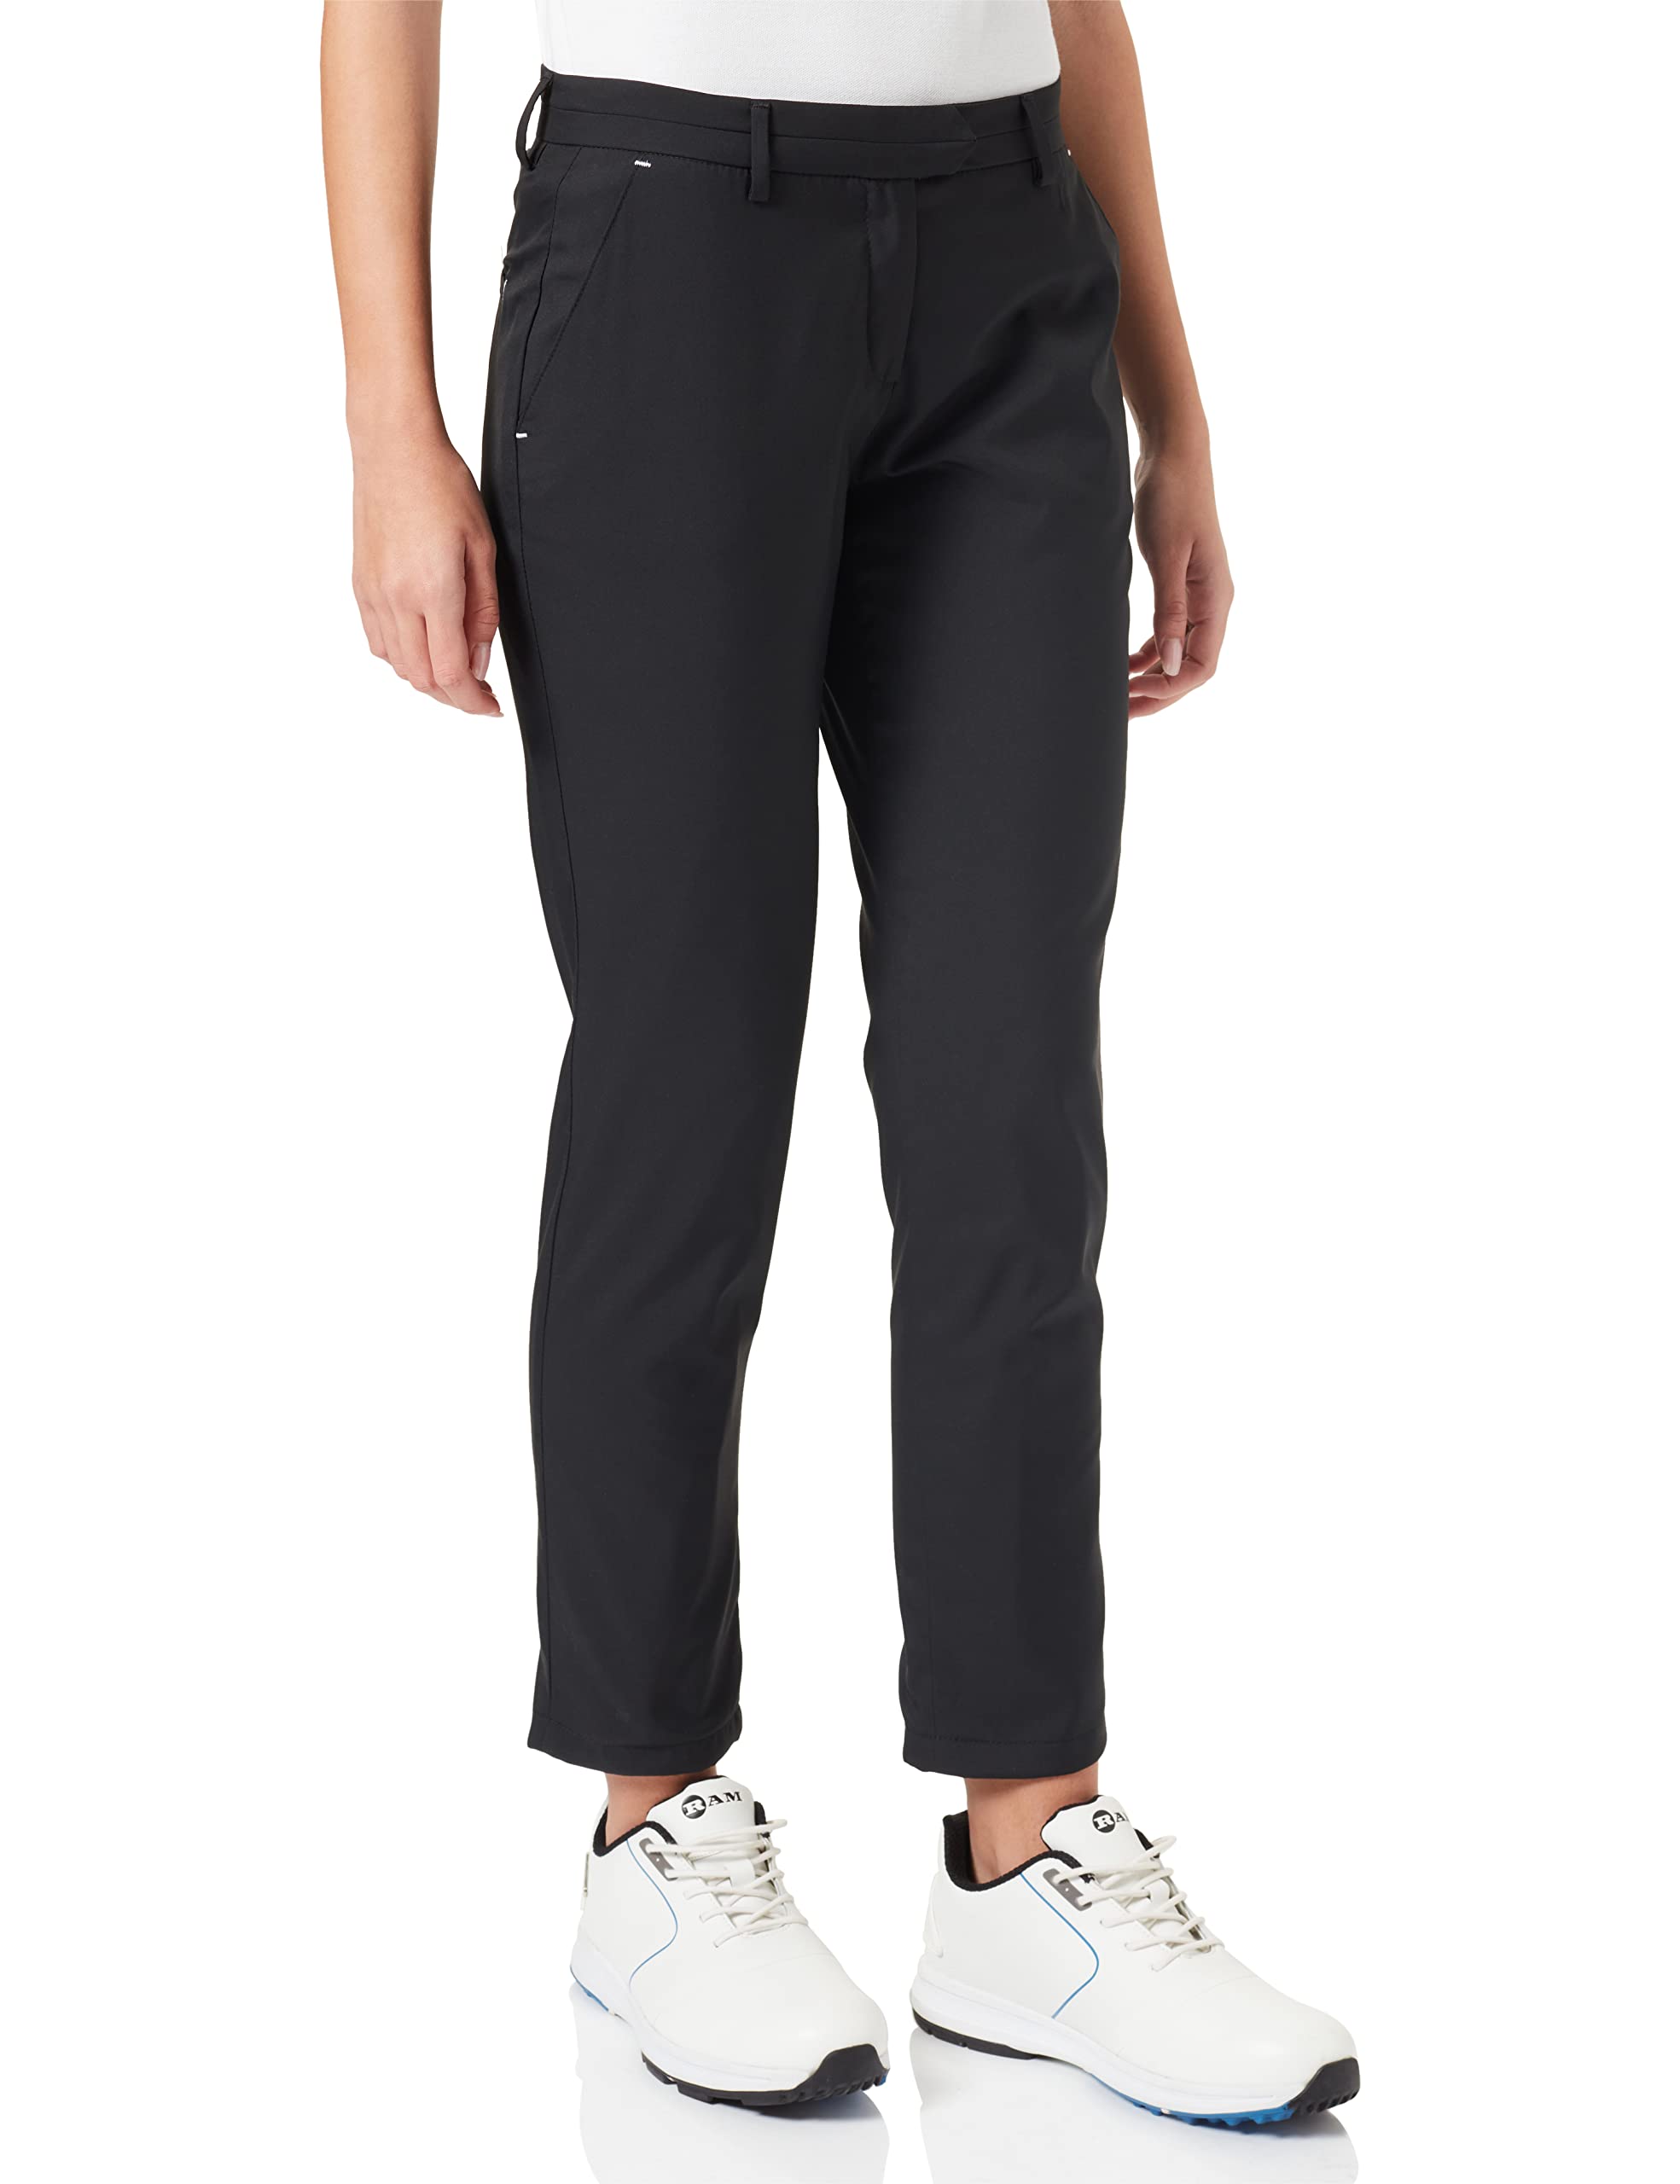 Brax Golf Damen Style Calina Sporthose, BLACK, W27/L30 (Herstellergröße: 36K)